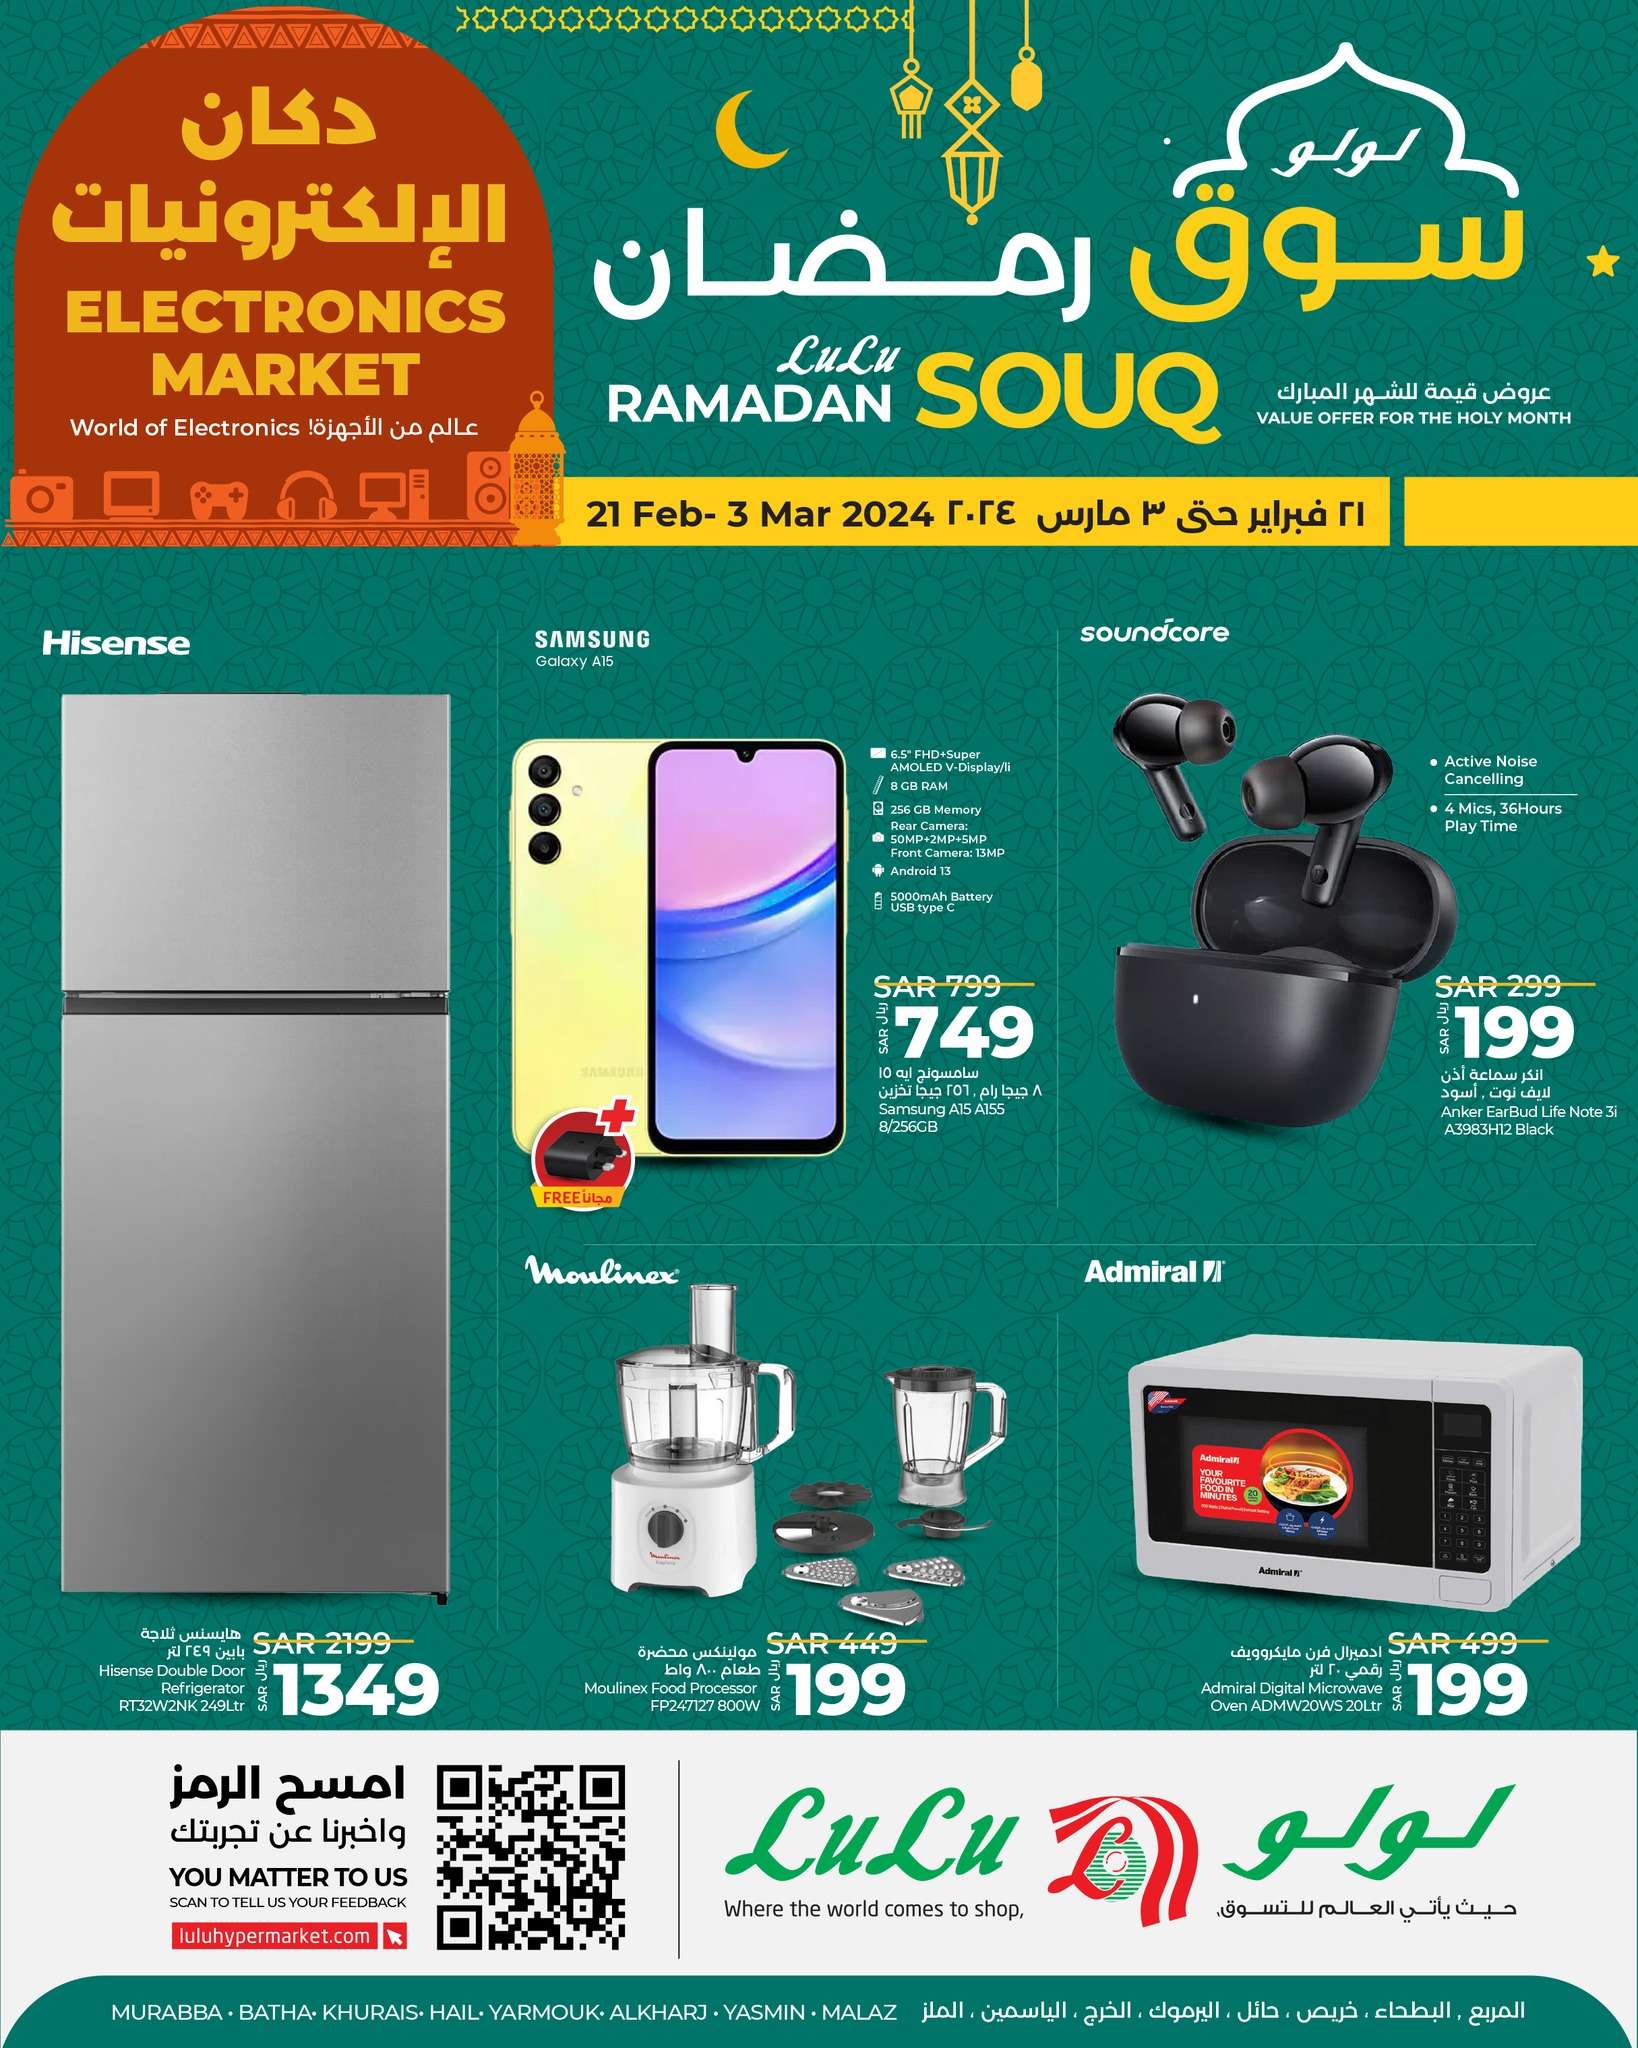 N6IFKR - عروض رمضان 2024 : عروض لولو الرياض علي الأجهزة الكهربائية و الجوالات الجمعة 23 فبراير 2024